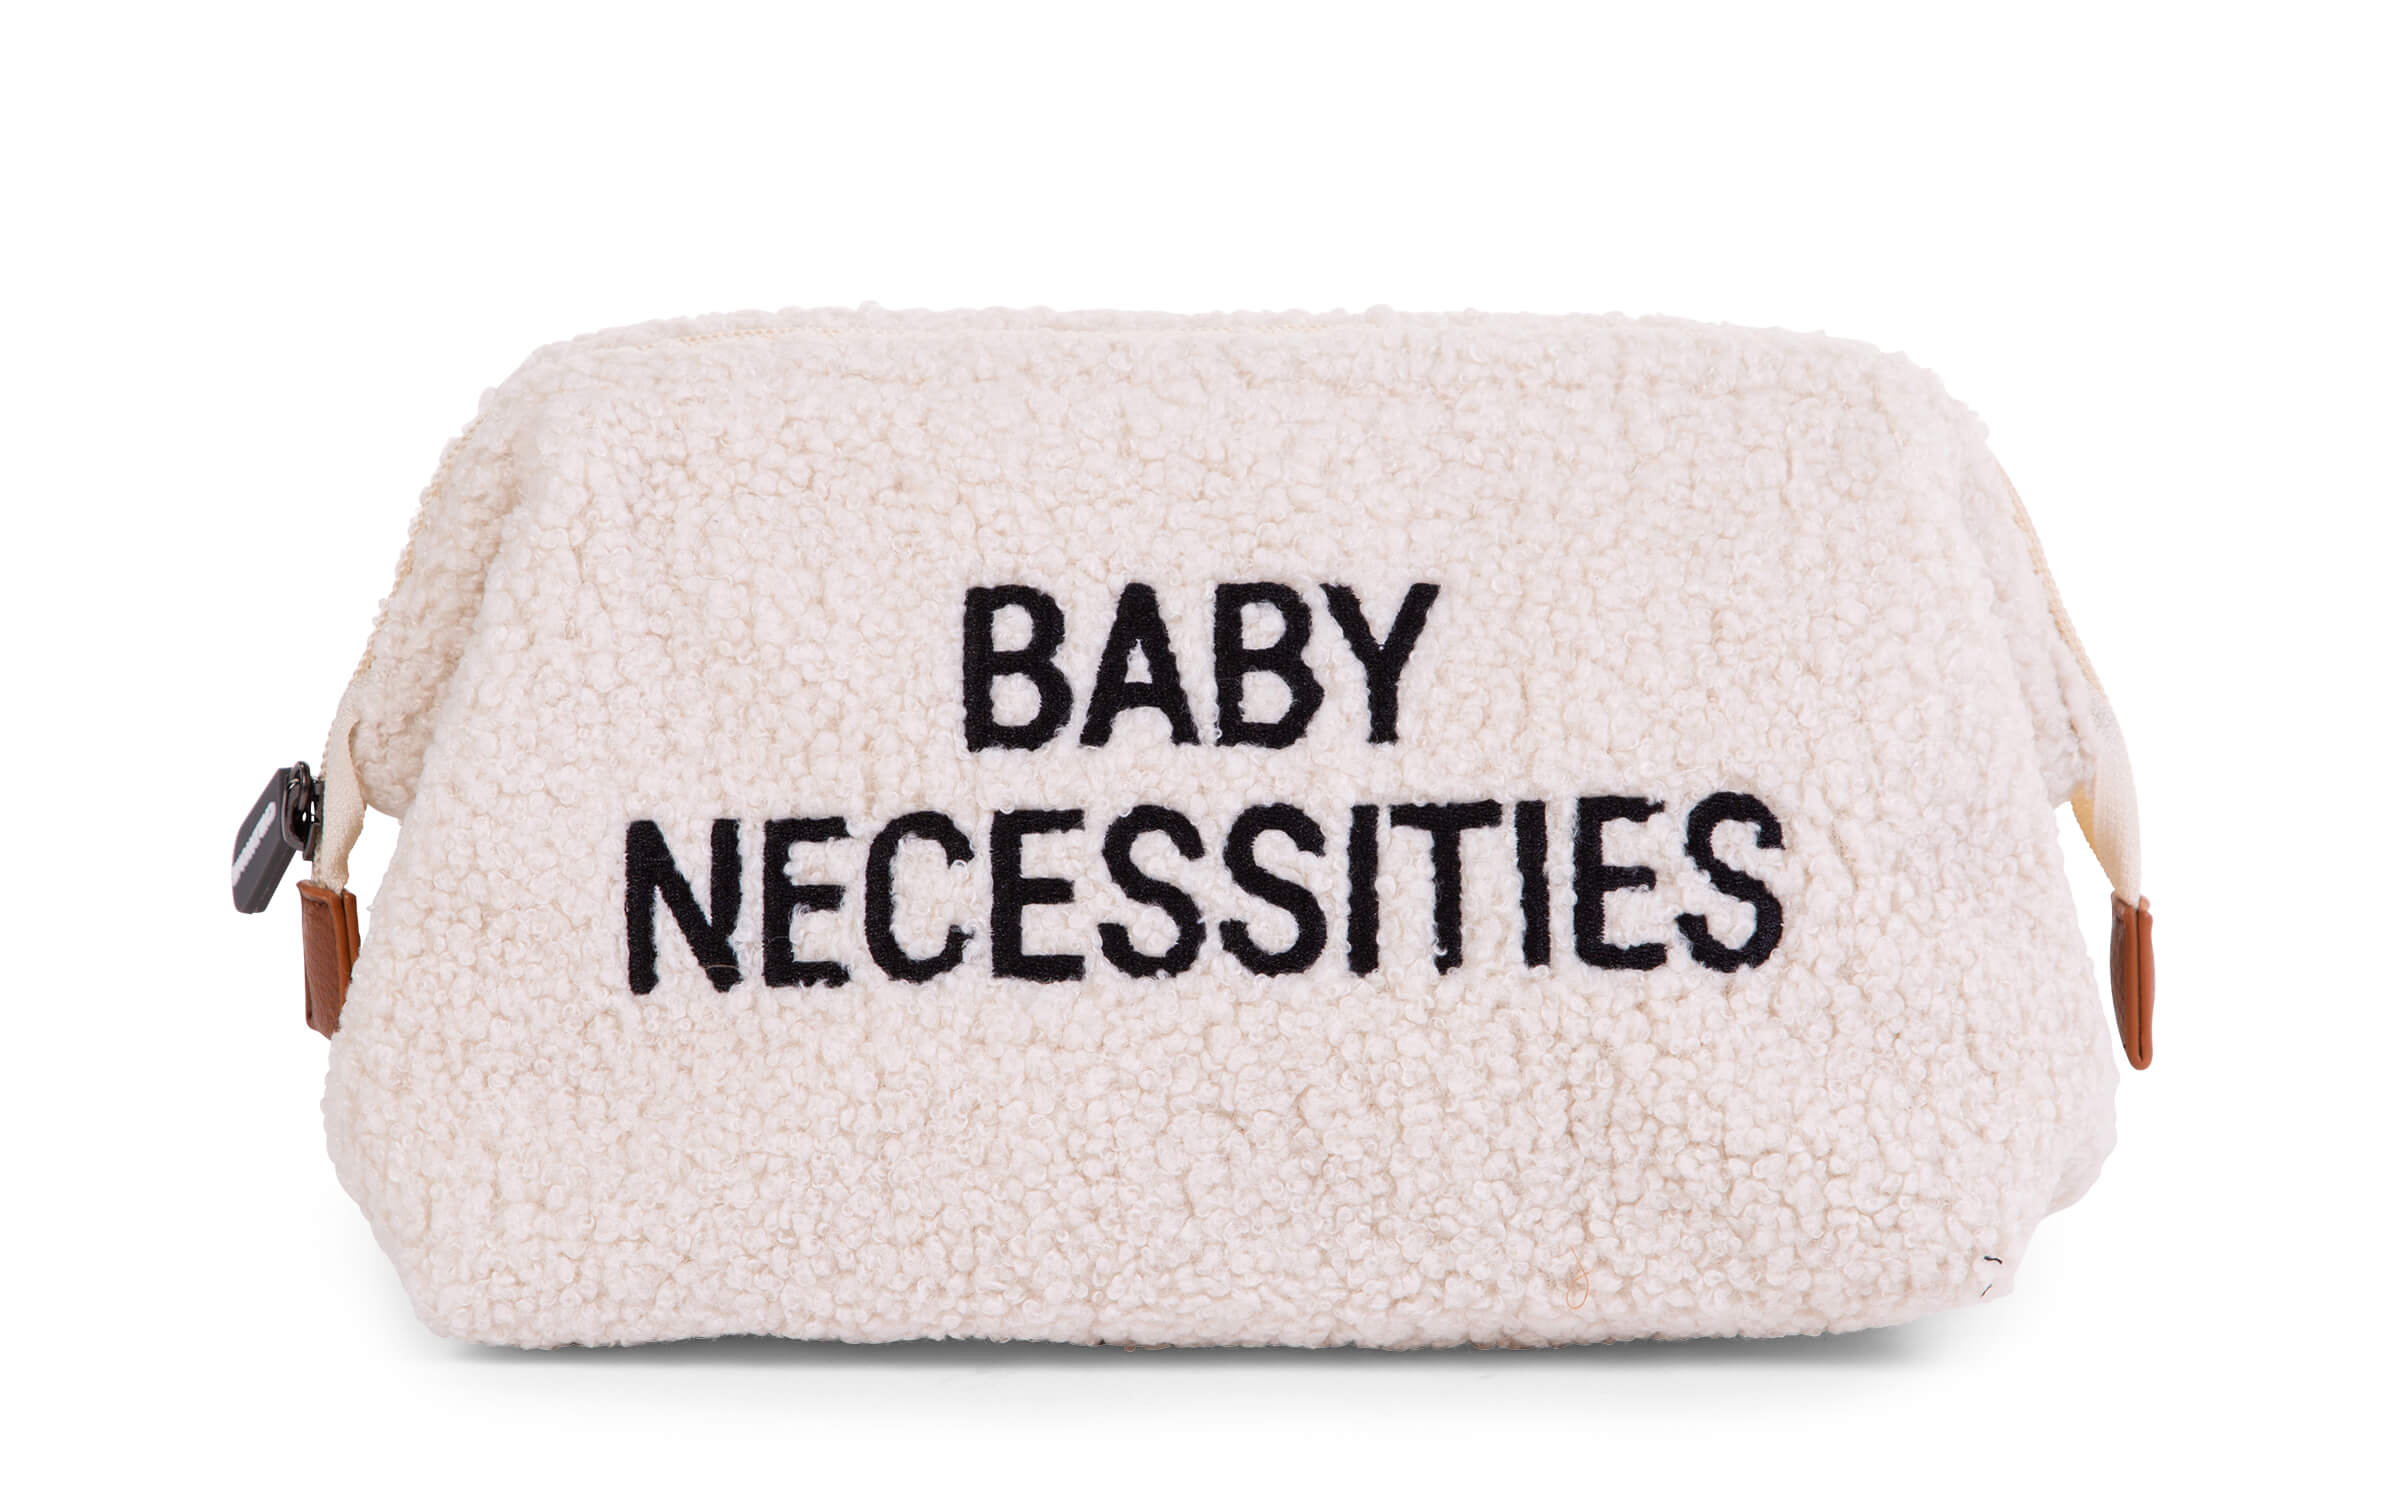 Baby Necessities Trousse De Toilette - Teddy - Ecru